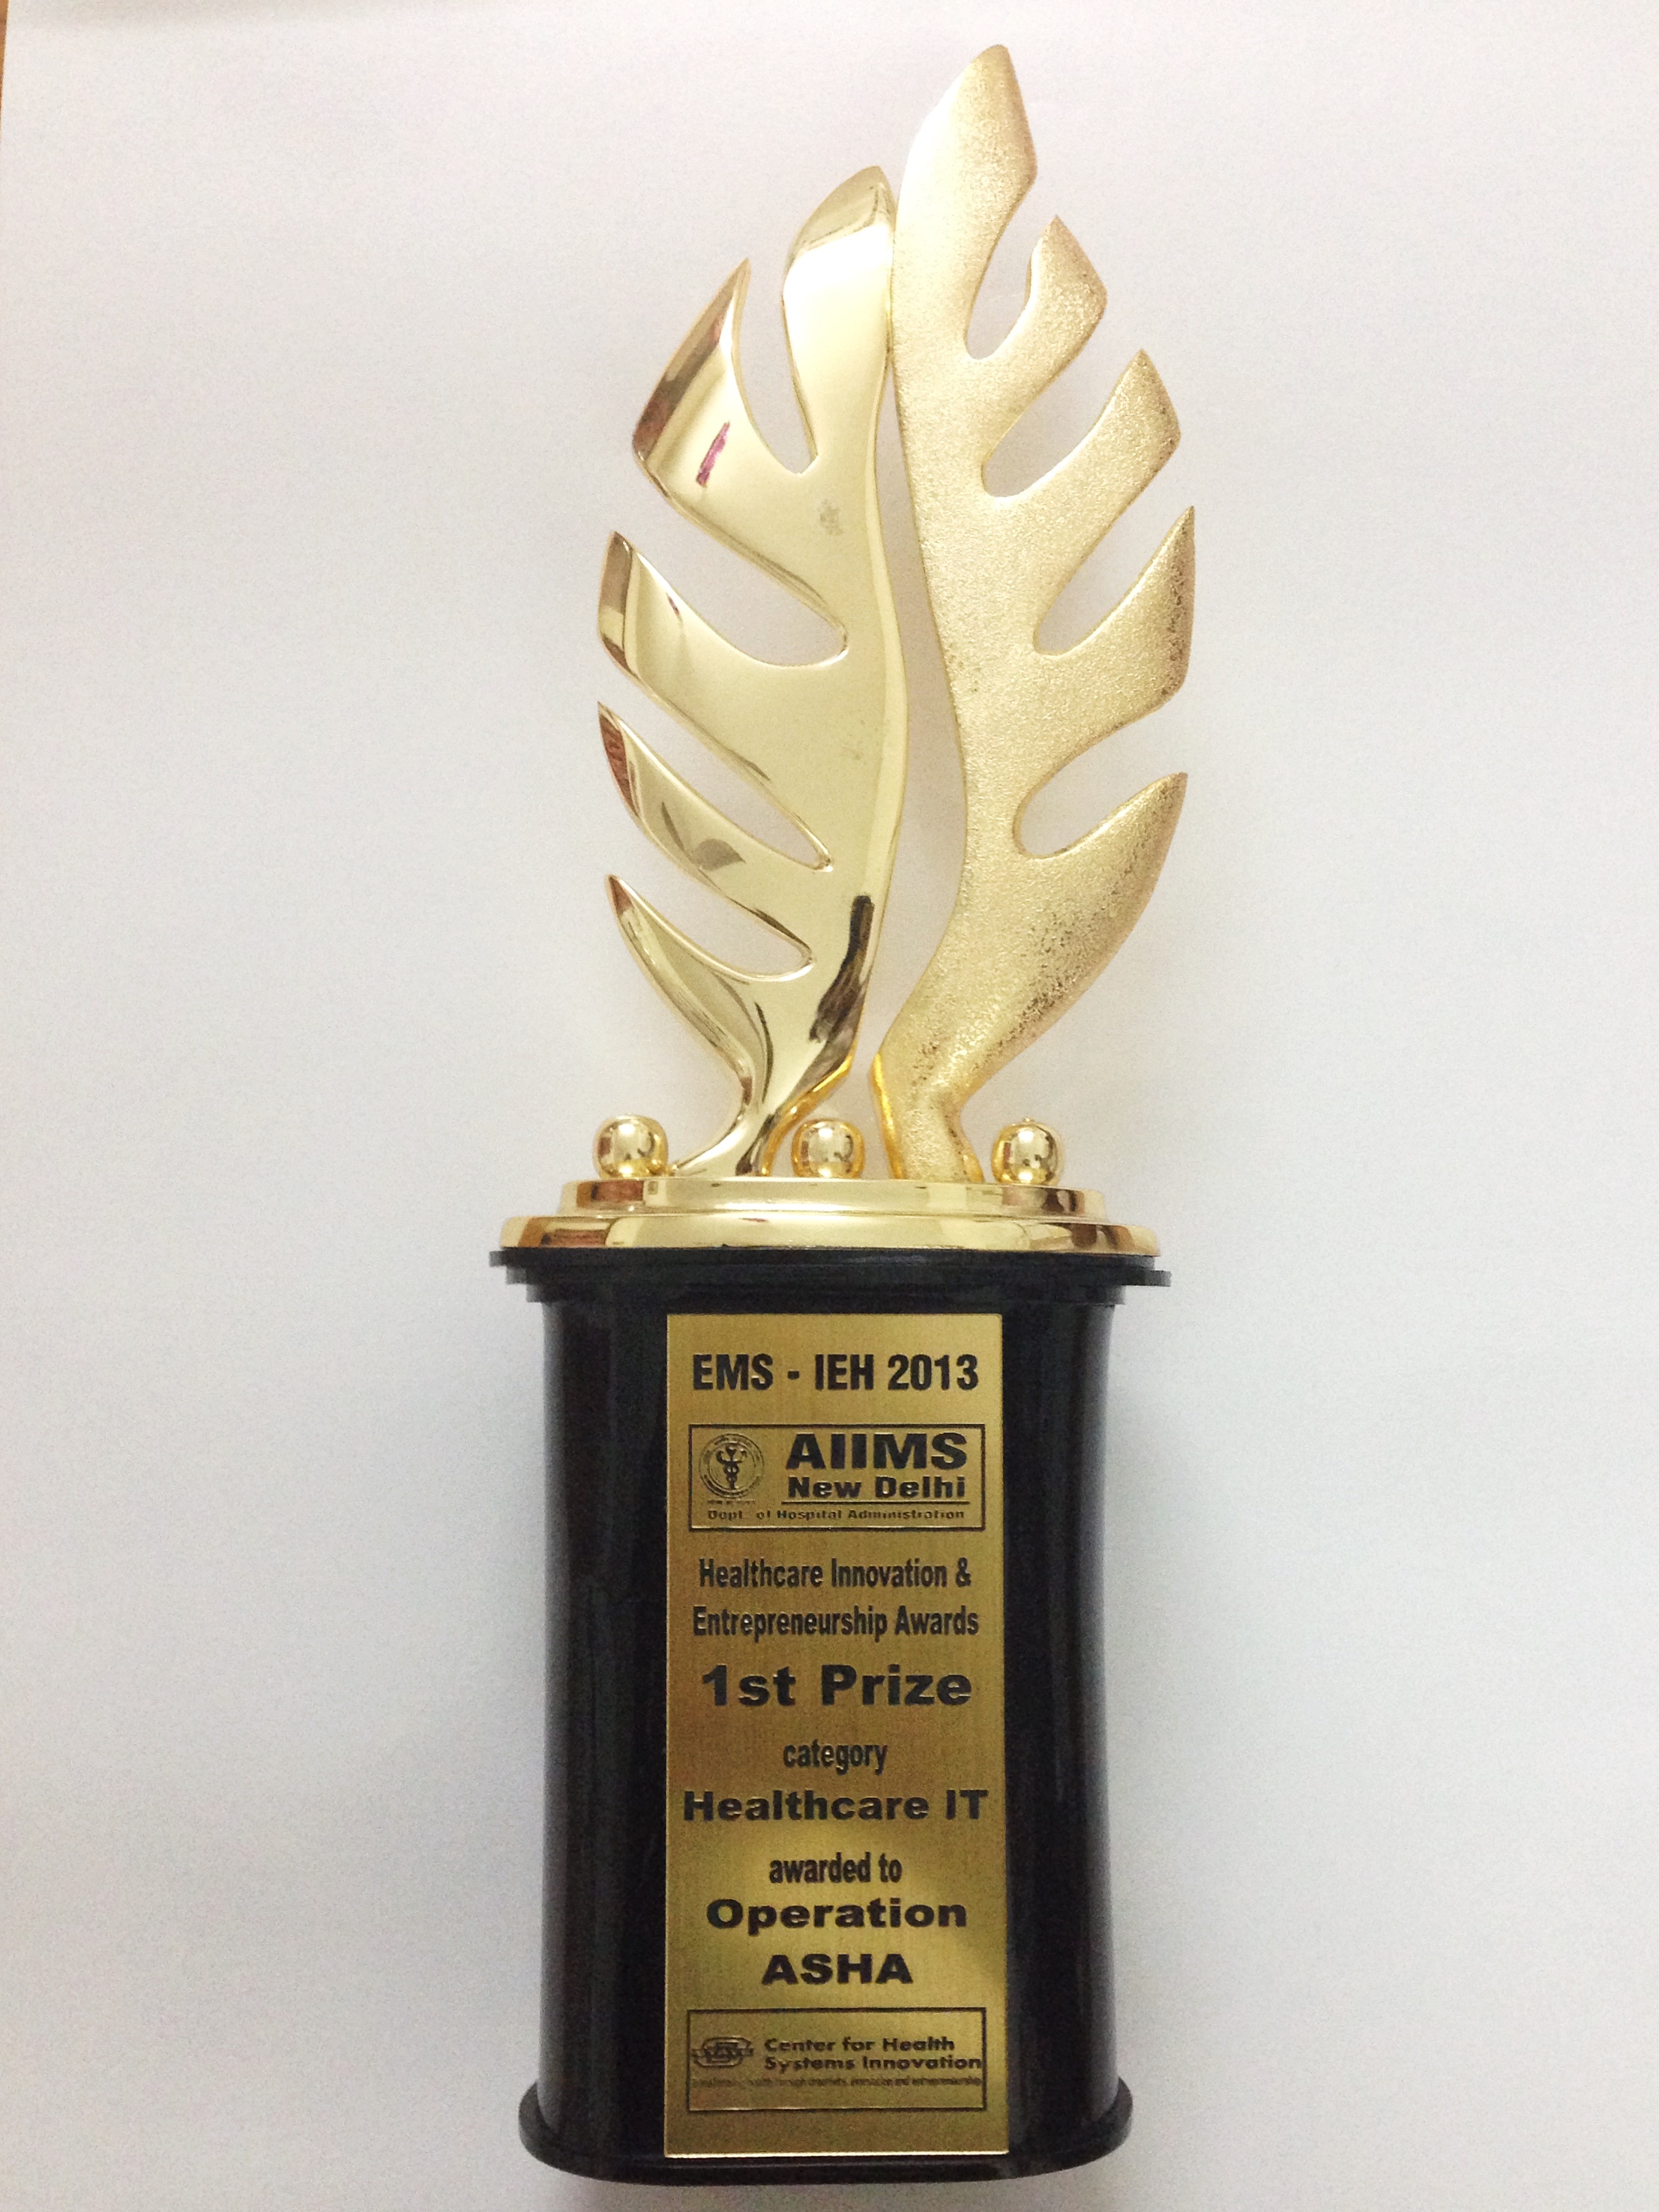 Operation ASHA Won An Award Under The Category “Innovation & Entrepreneurship In Healthcare IT”